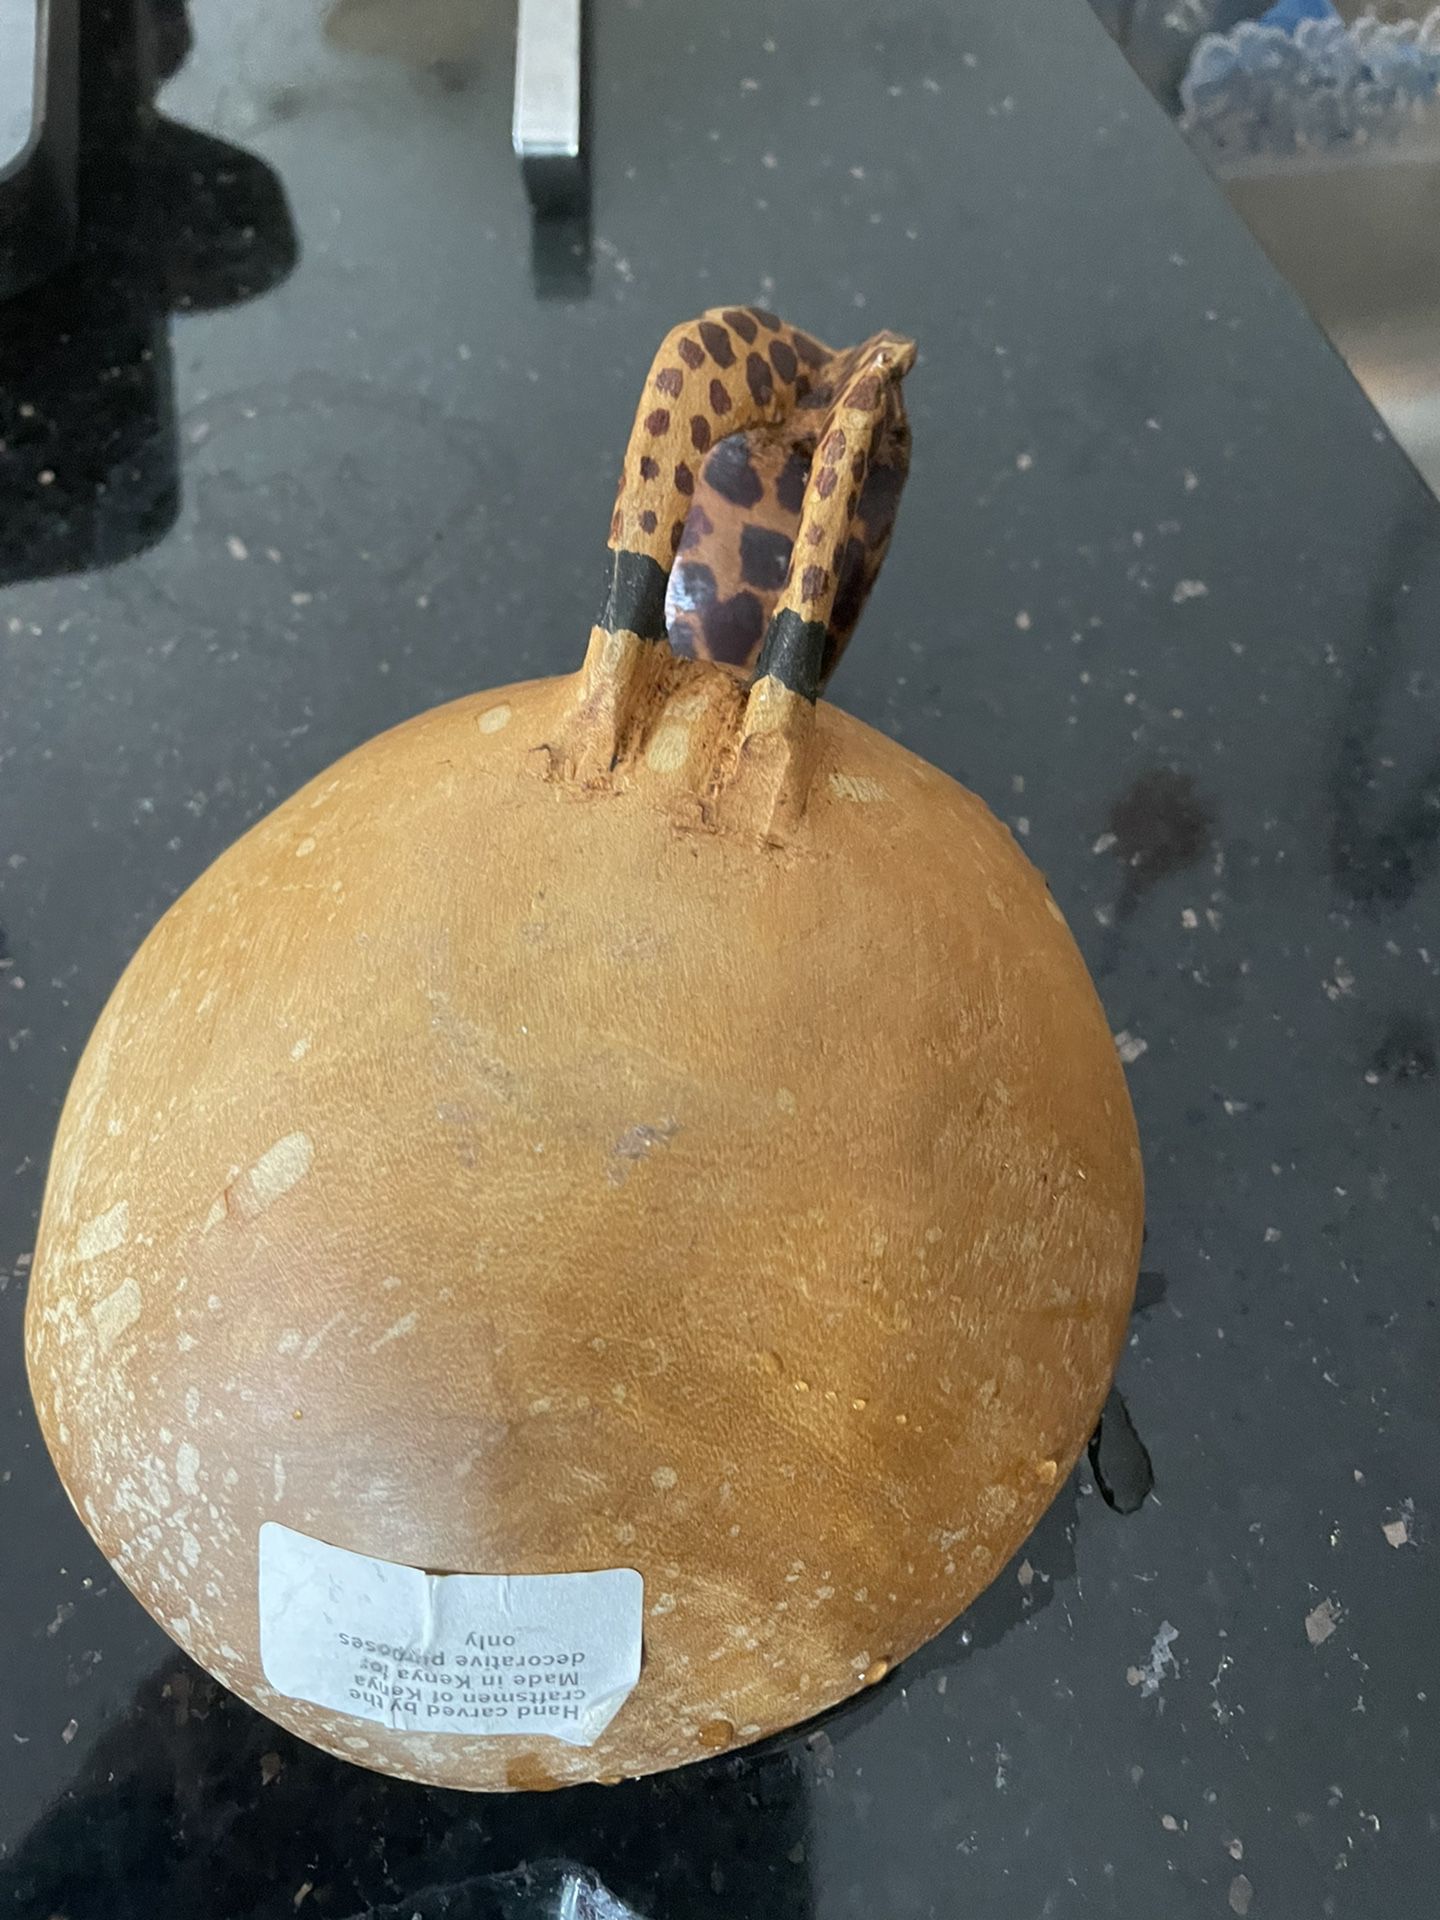 African Decor Giraffe Drinking From Wooden Bowl Made in Kenya 5” Round  Handmade in Parkland 